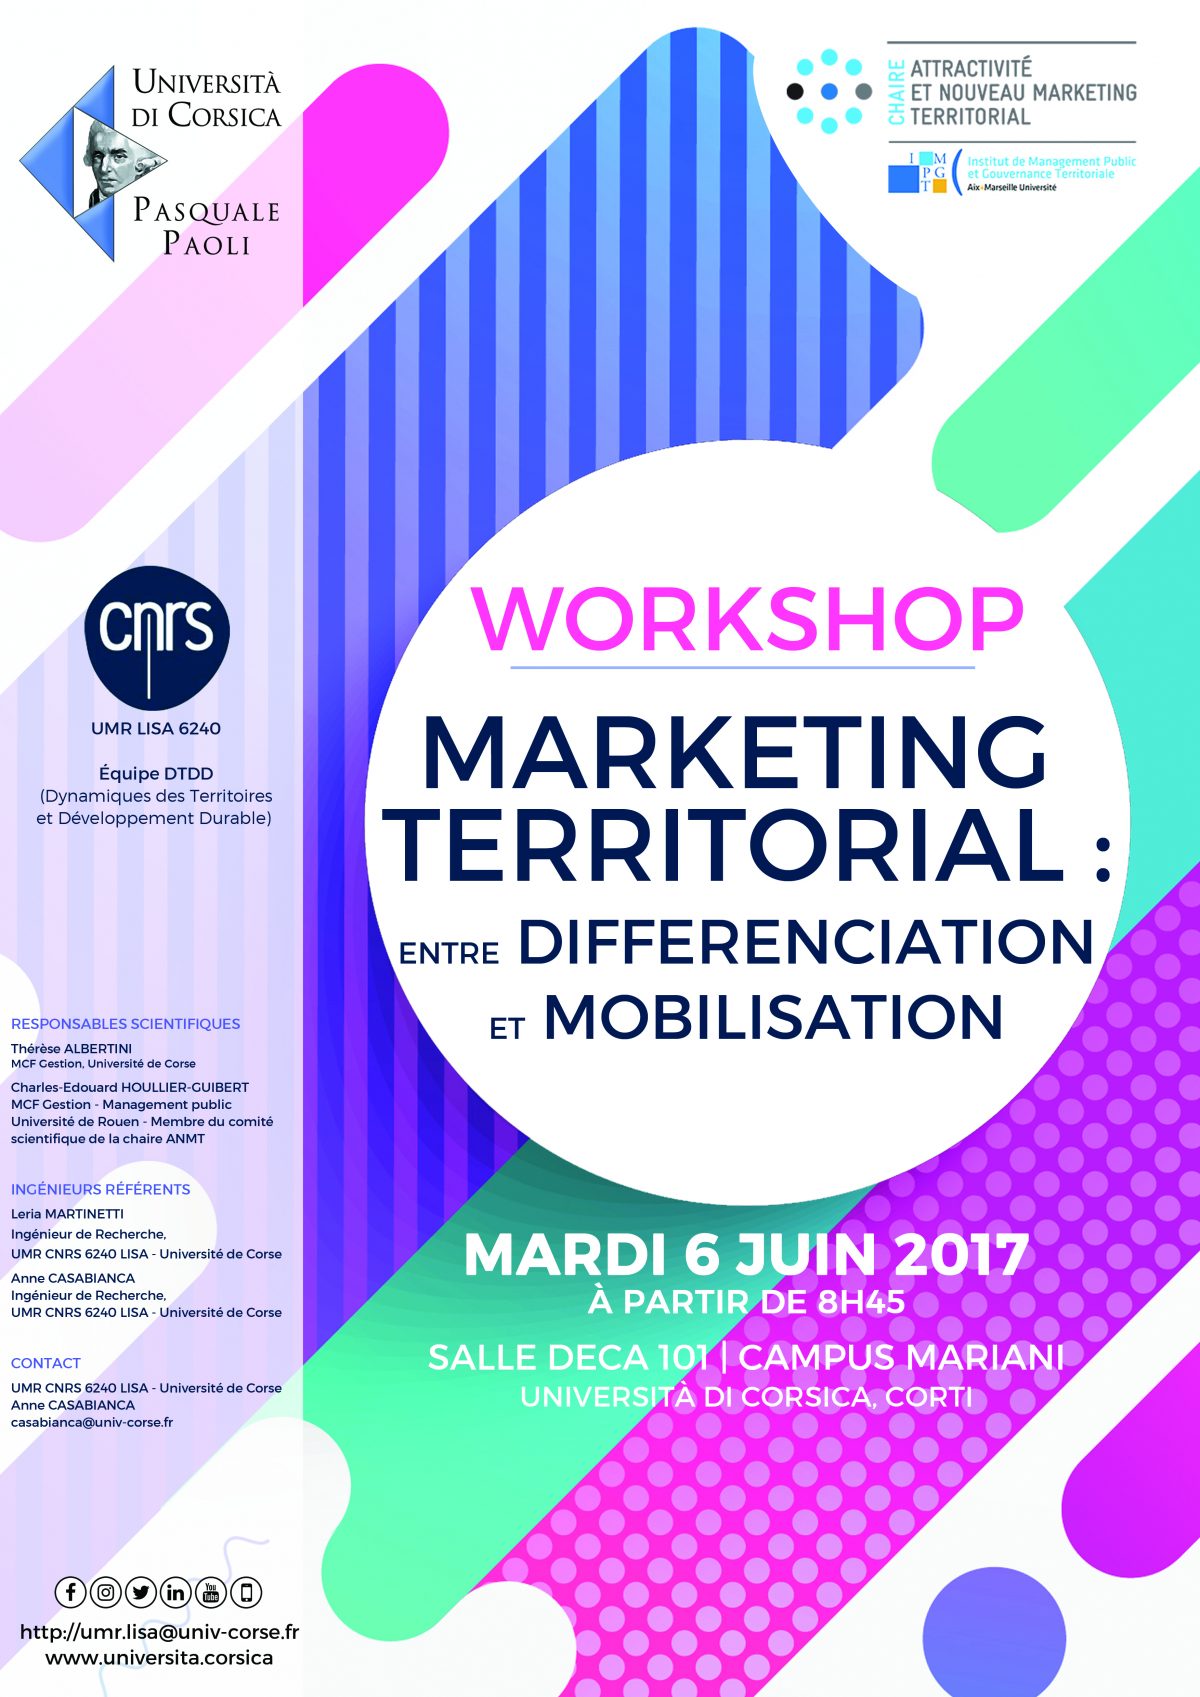 Workshop Marketing territorial : entre différenciation et mobilisation